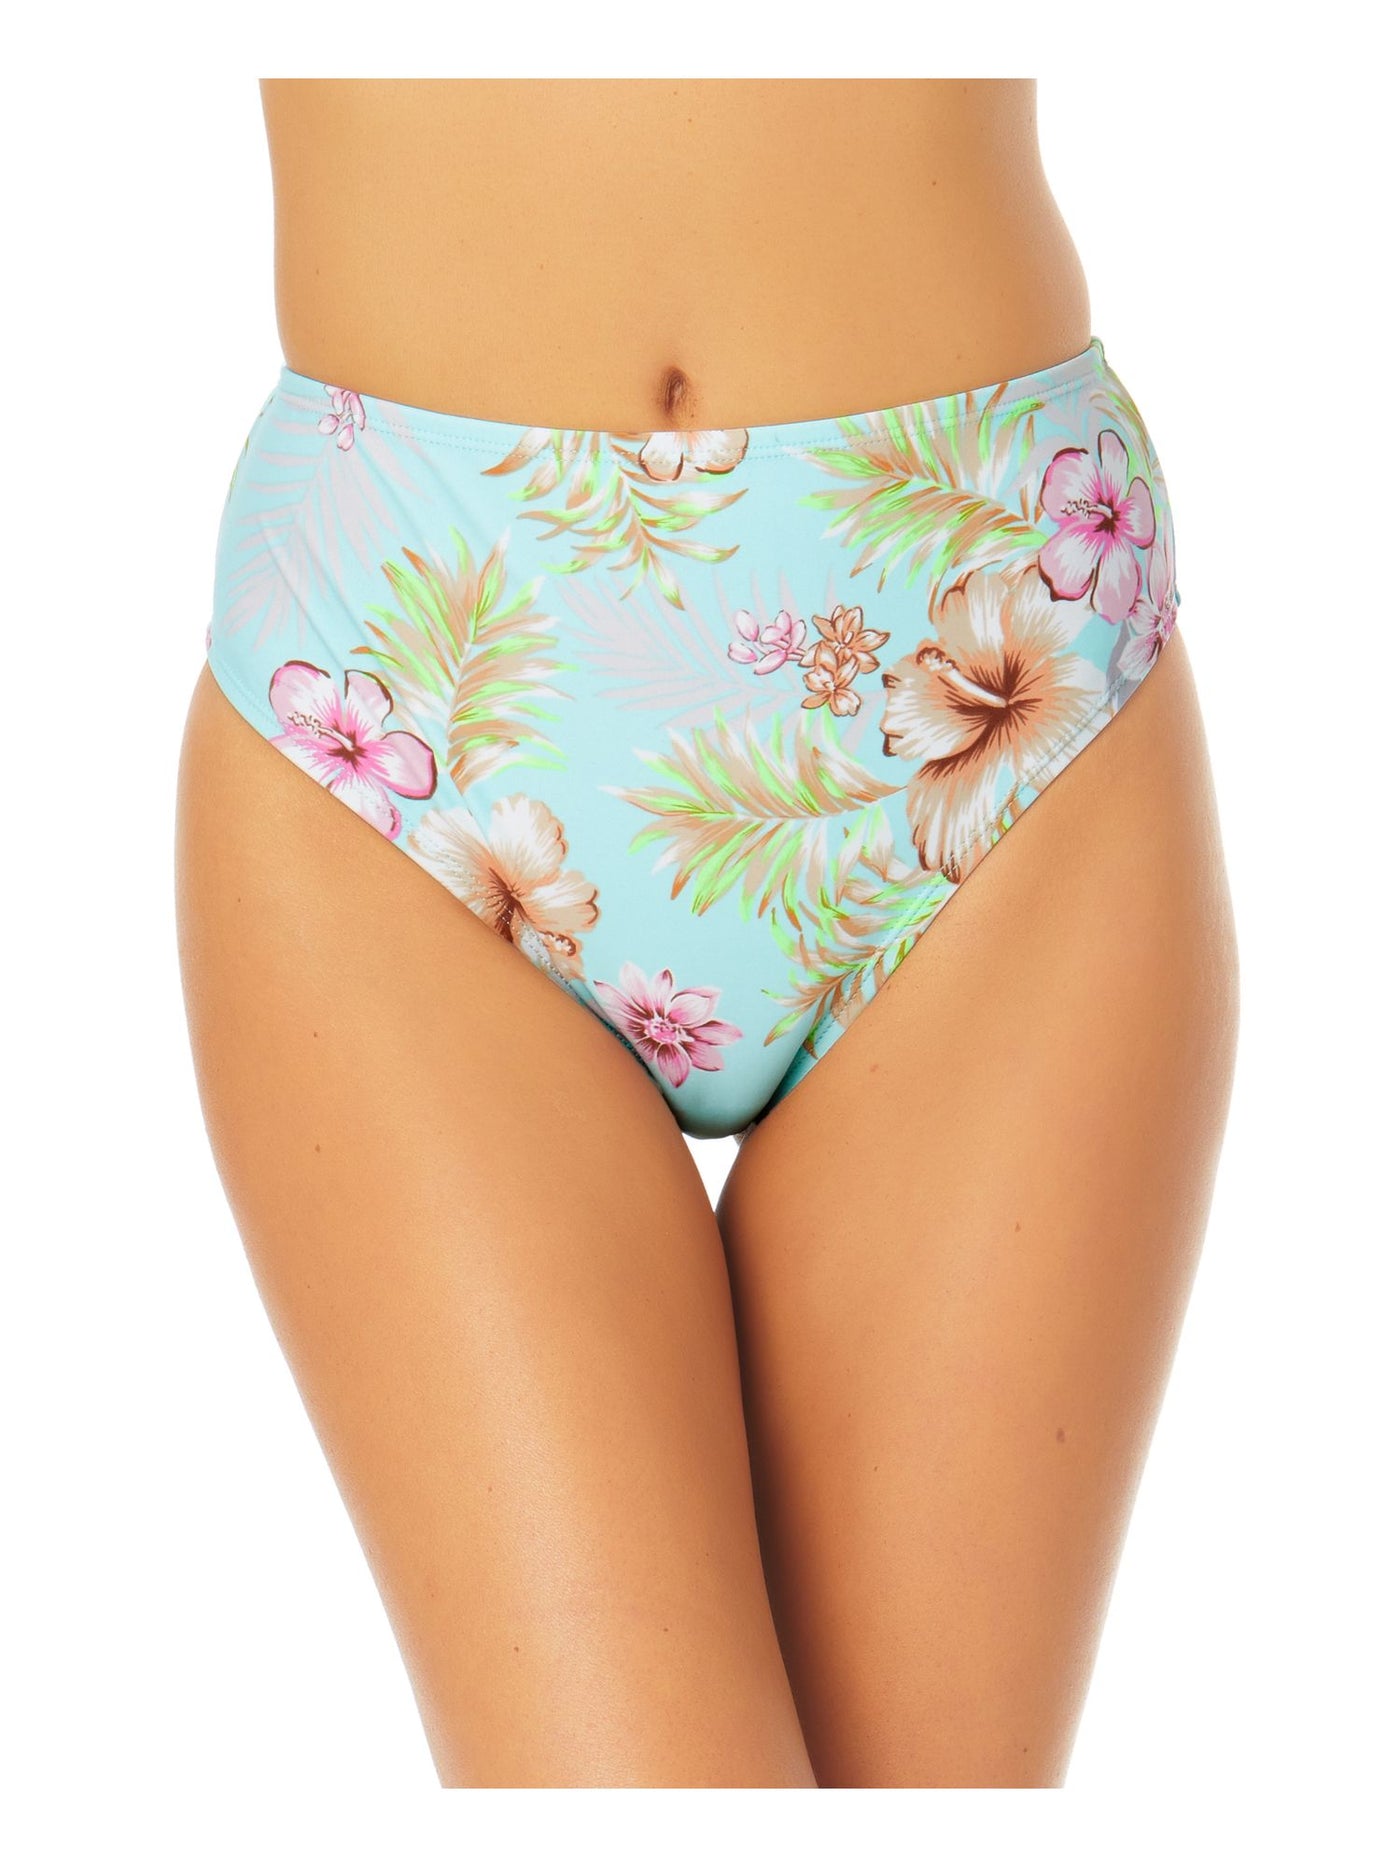 CALIFORNIA SUNSHINE Women's Aqua Tropical Print Stretch Mid-Rise Lined Bikini Moderate Coverage High Leg Swimsuit Bottom M